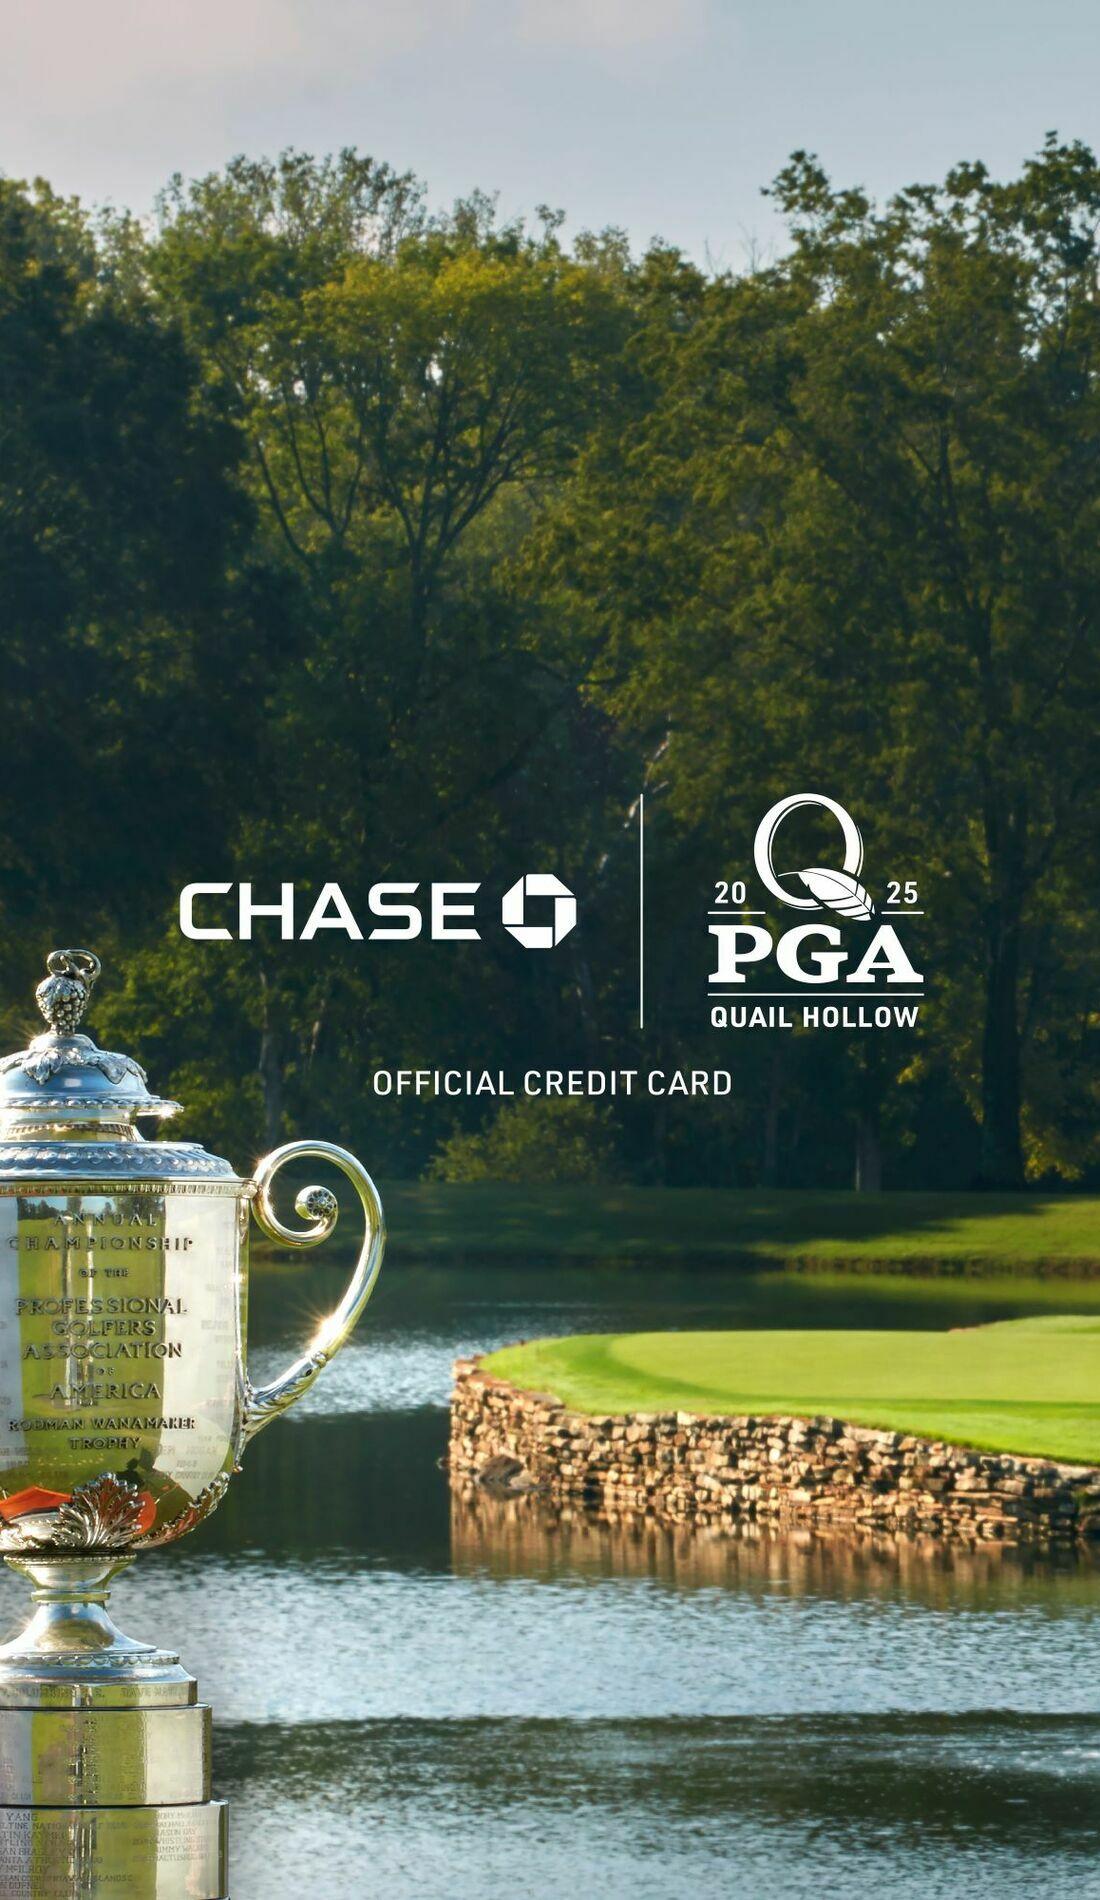 PGA Championship  Official Website